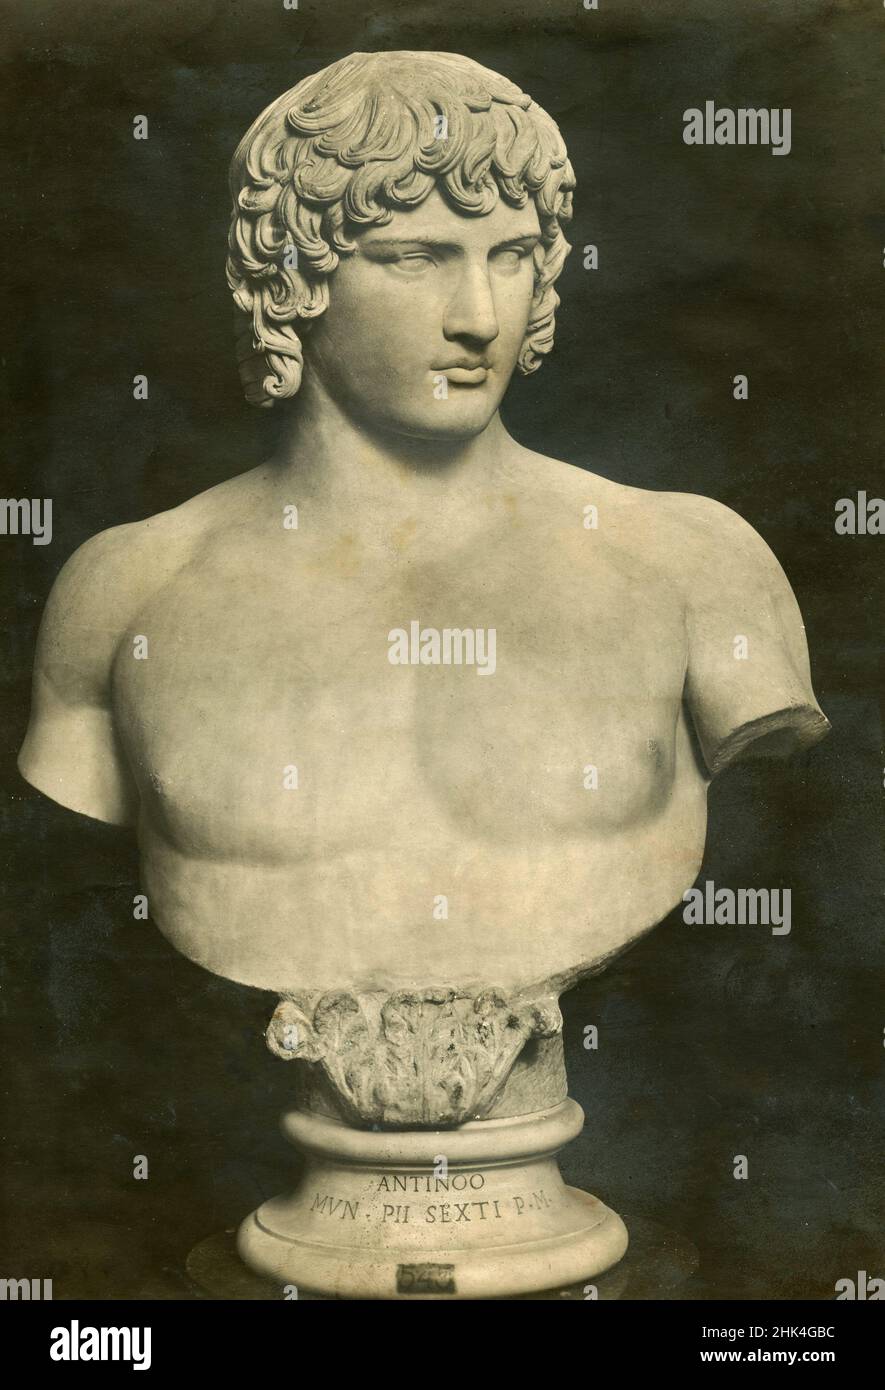 Antinous, Sculpture de marbre grec ancien, Italie 1920s Banque D'Images